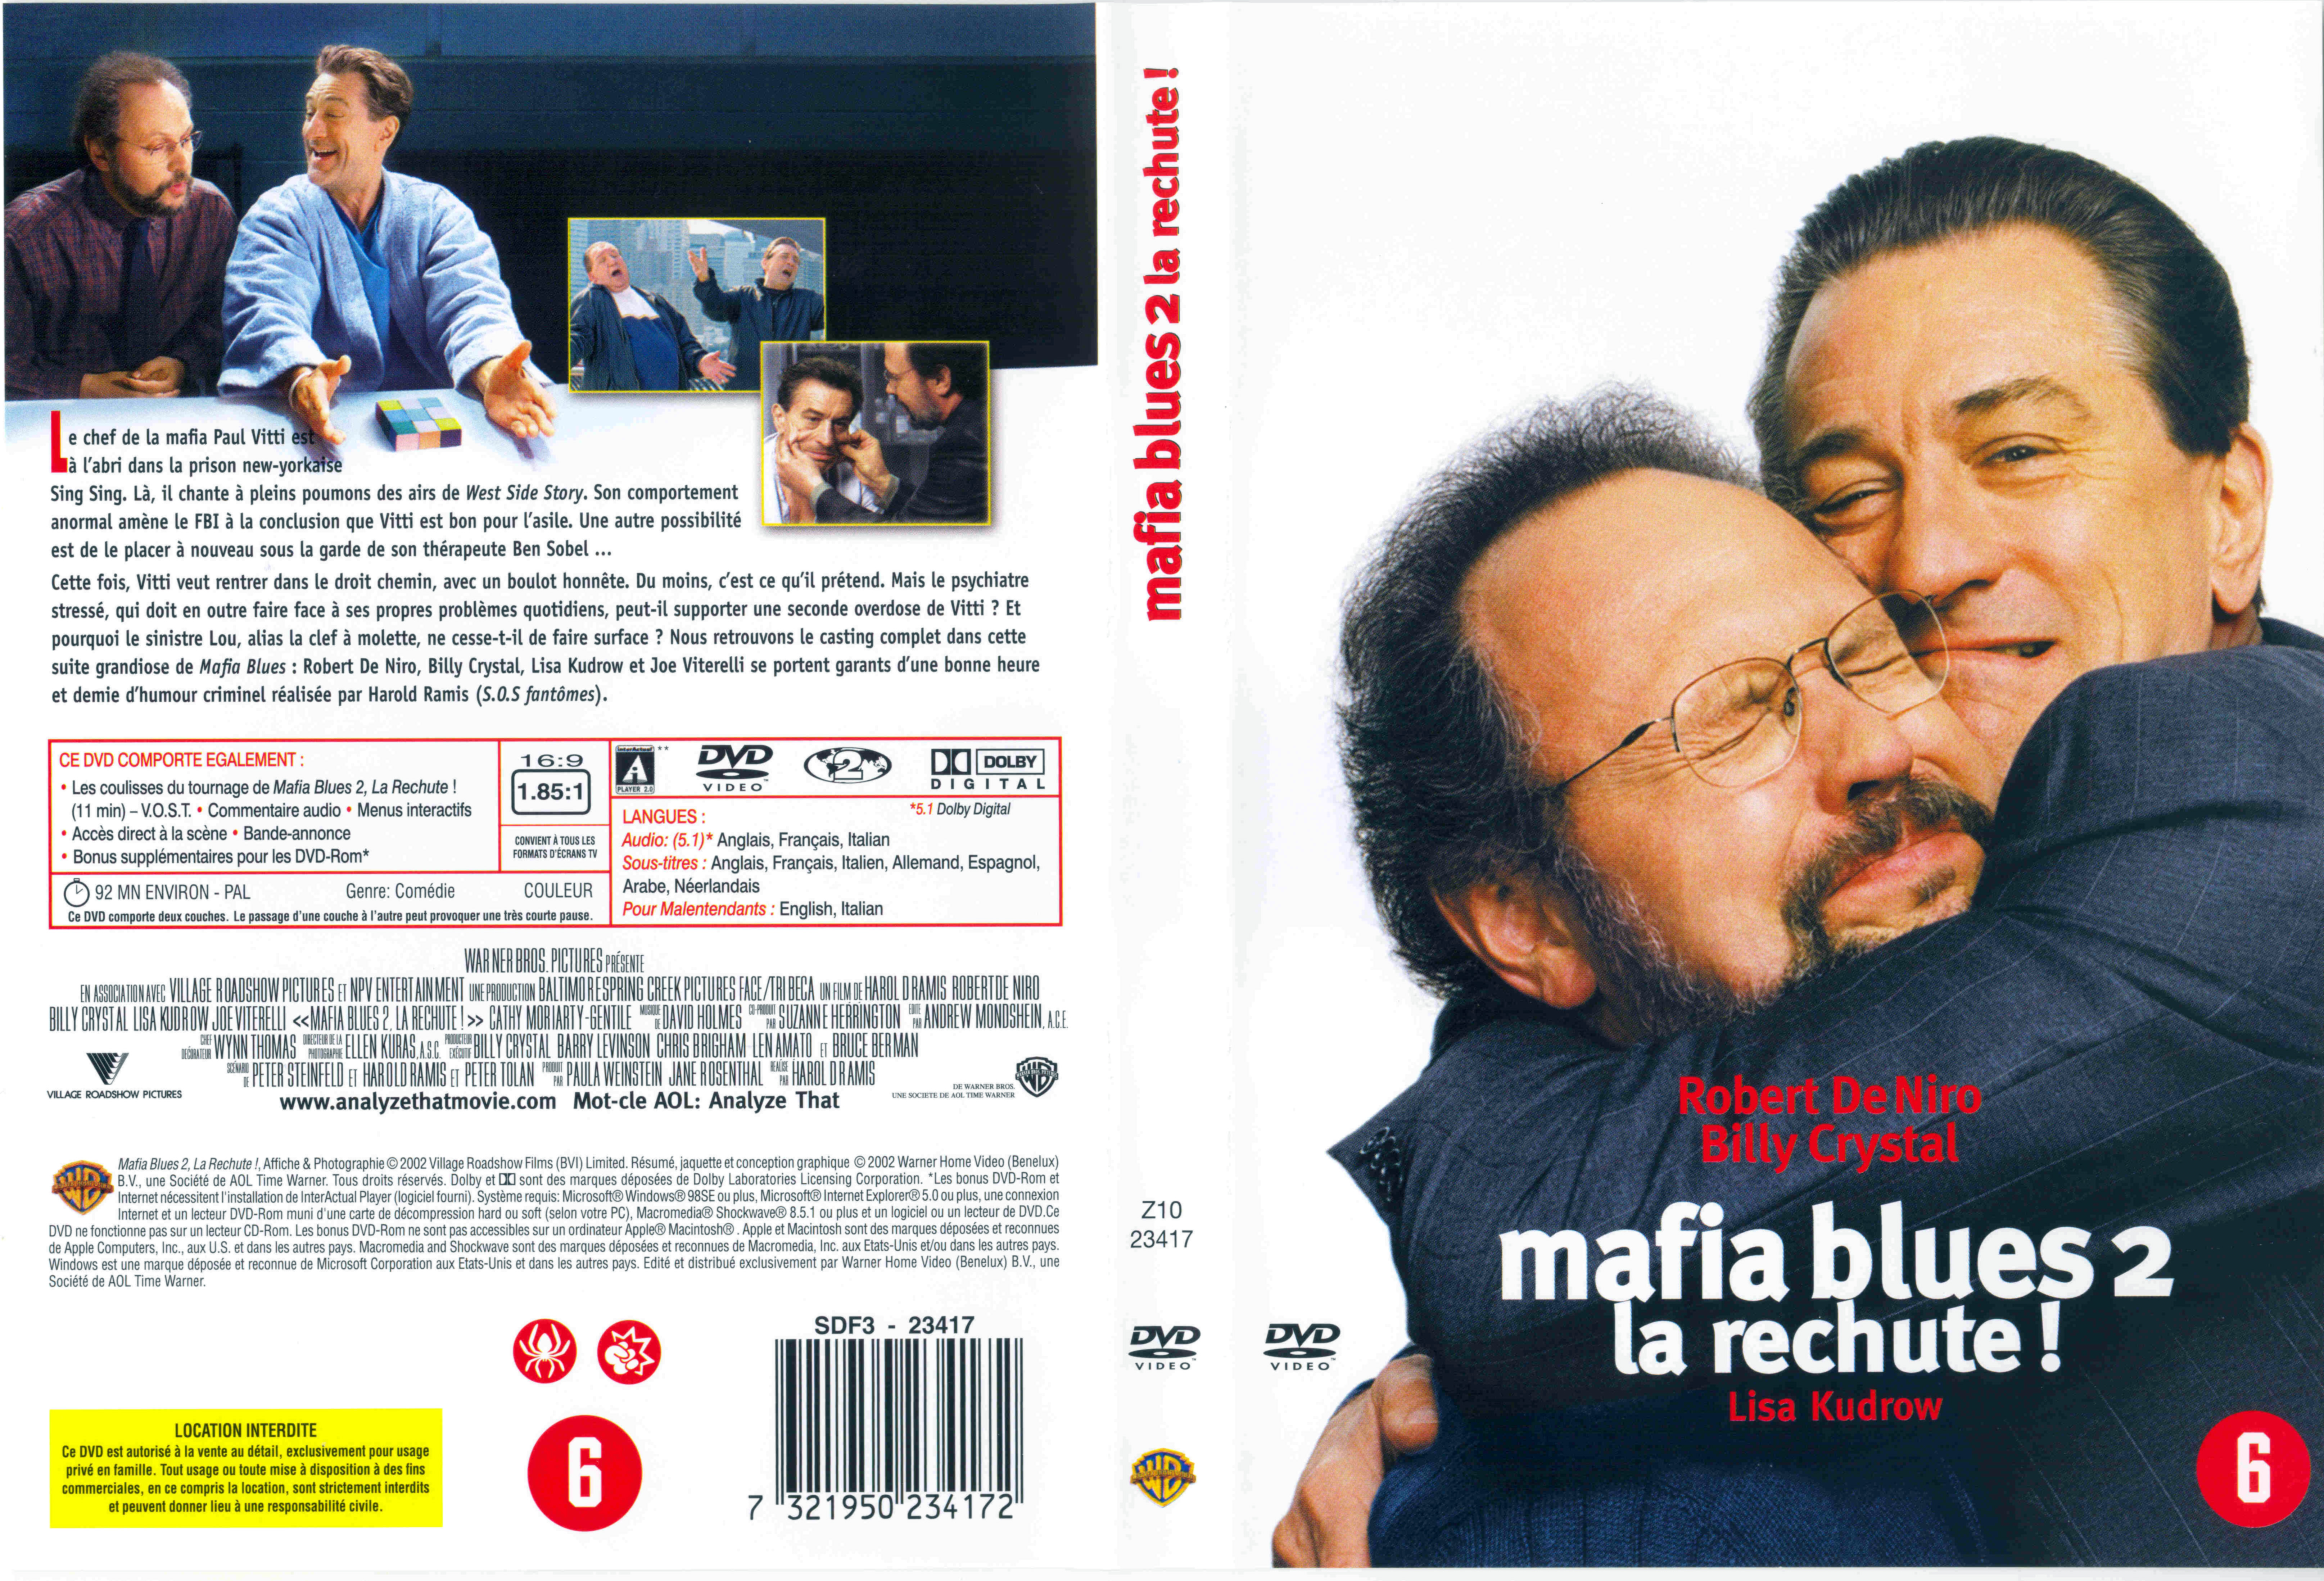 Jaquette DVD Mafia blues 2 v2